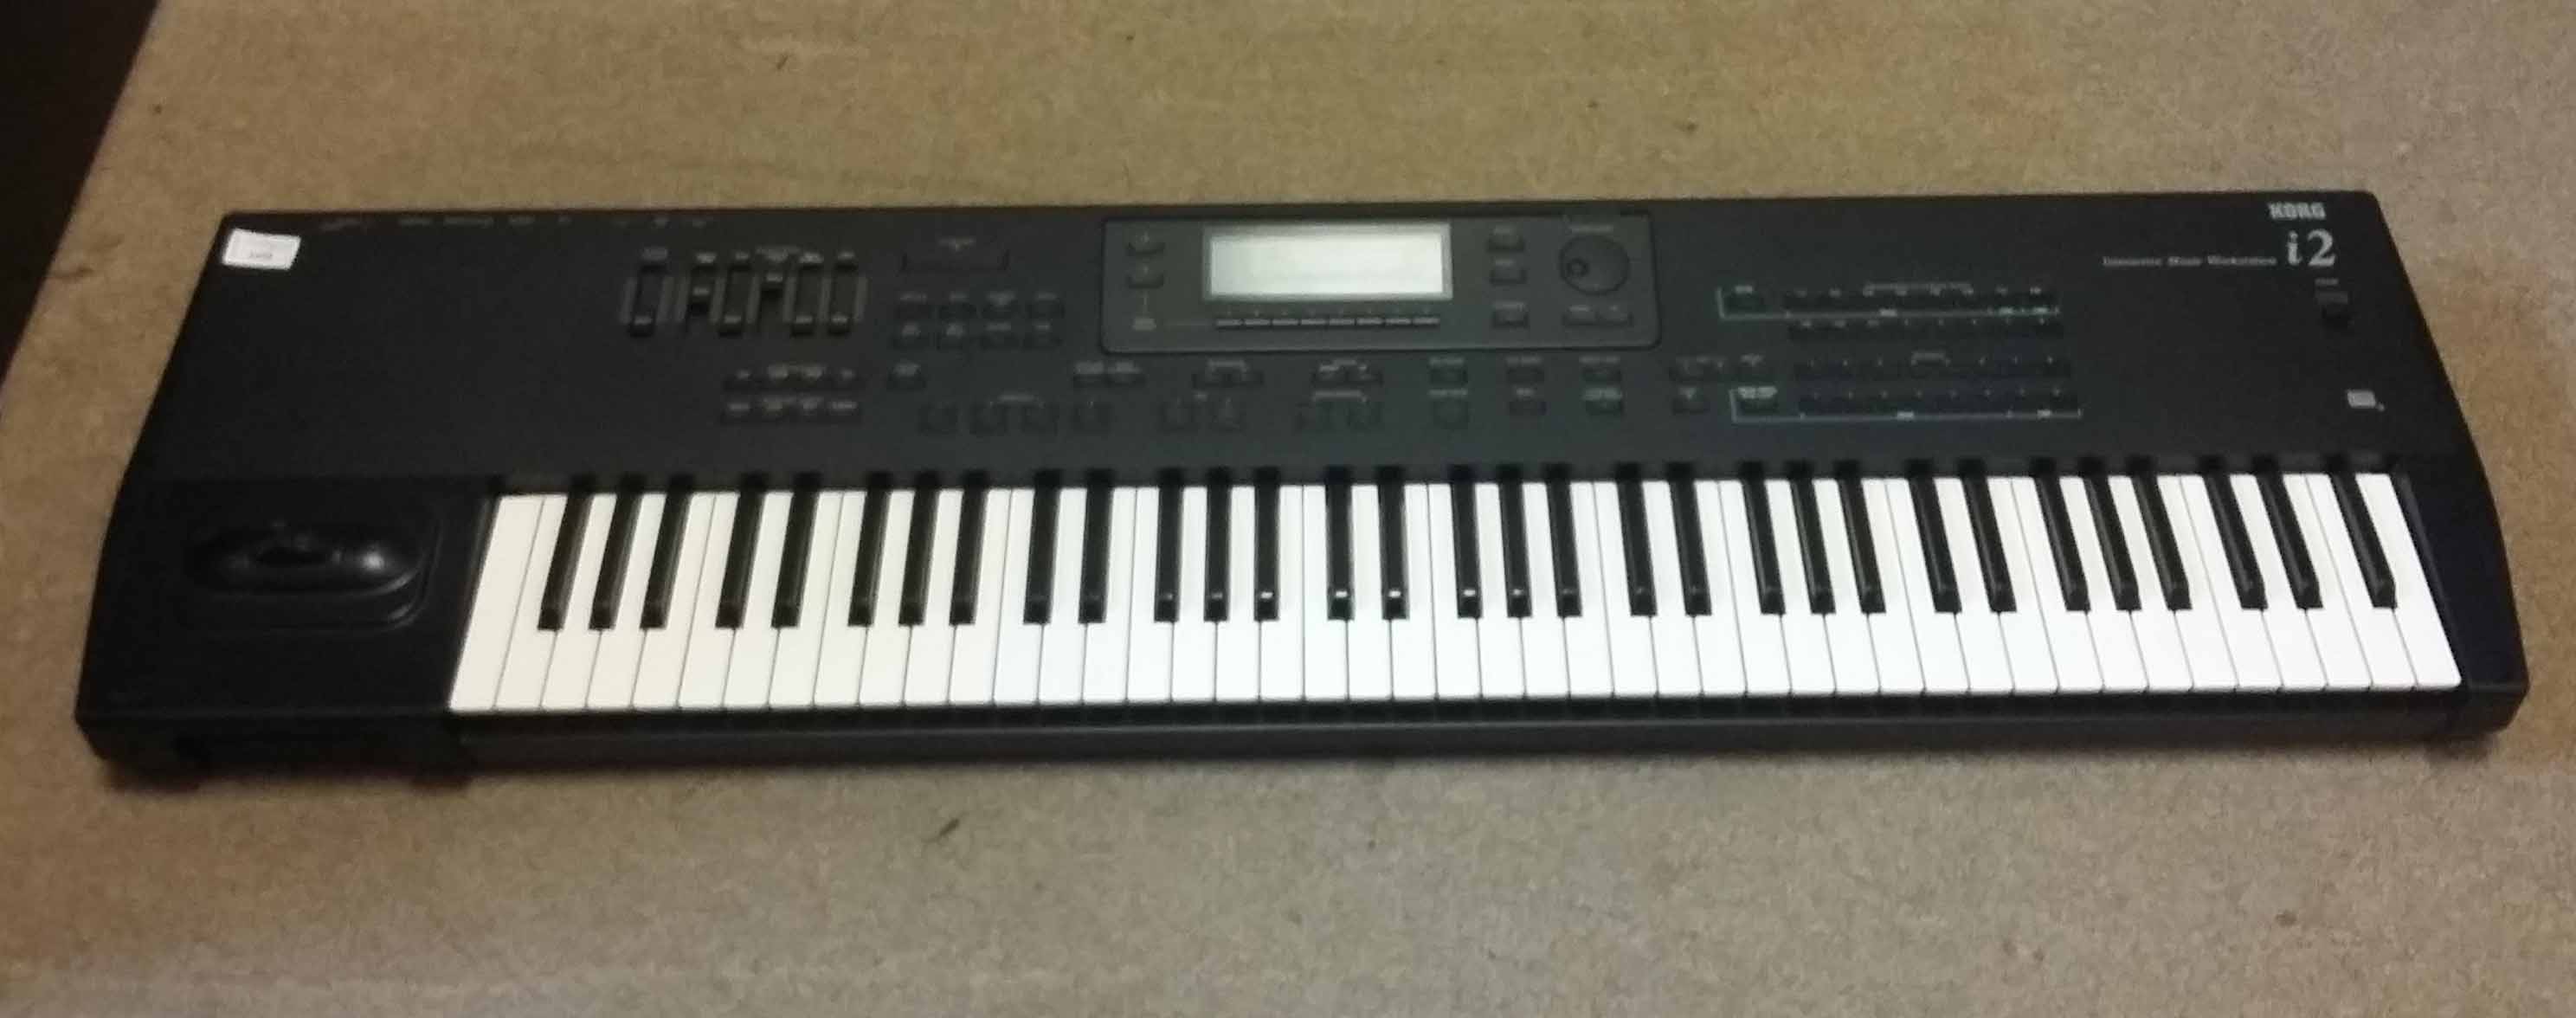 KORG I2 INTERACTIVE MUSIC WORKSTATION electronic keyboard, model I2, serial 310029, made in Japan,